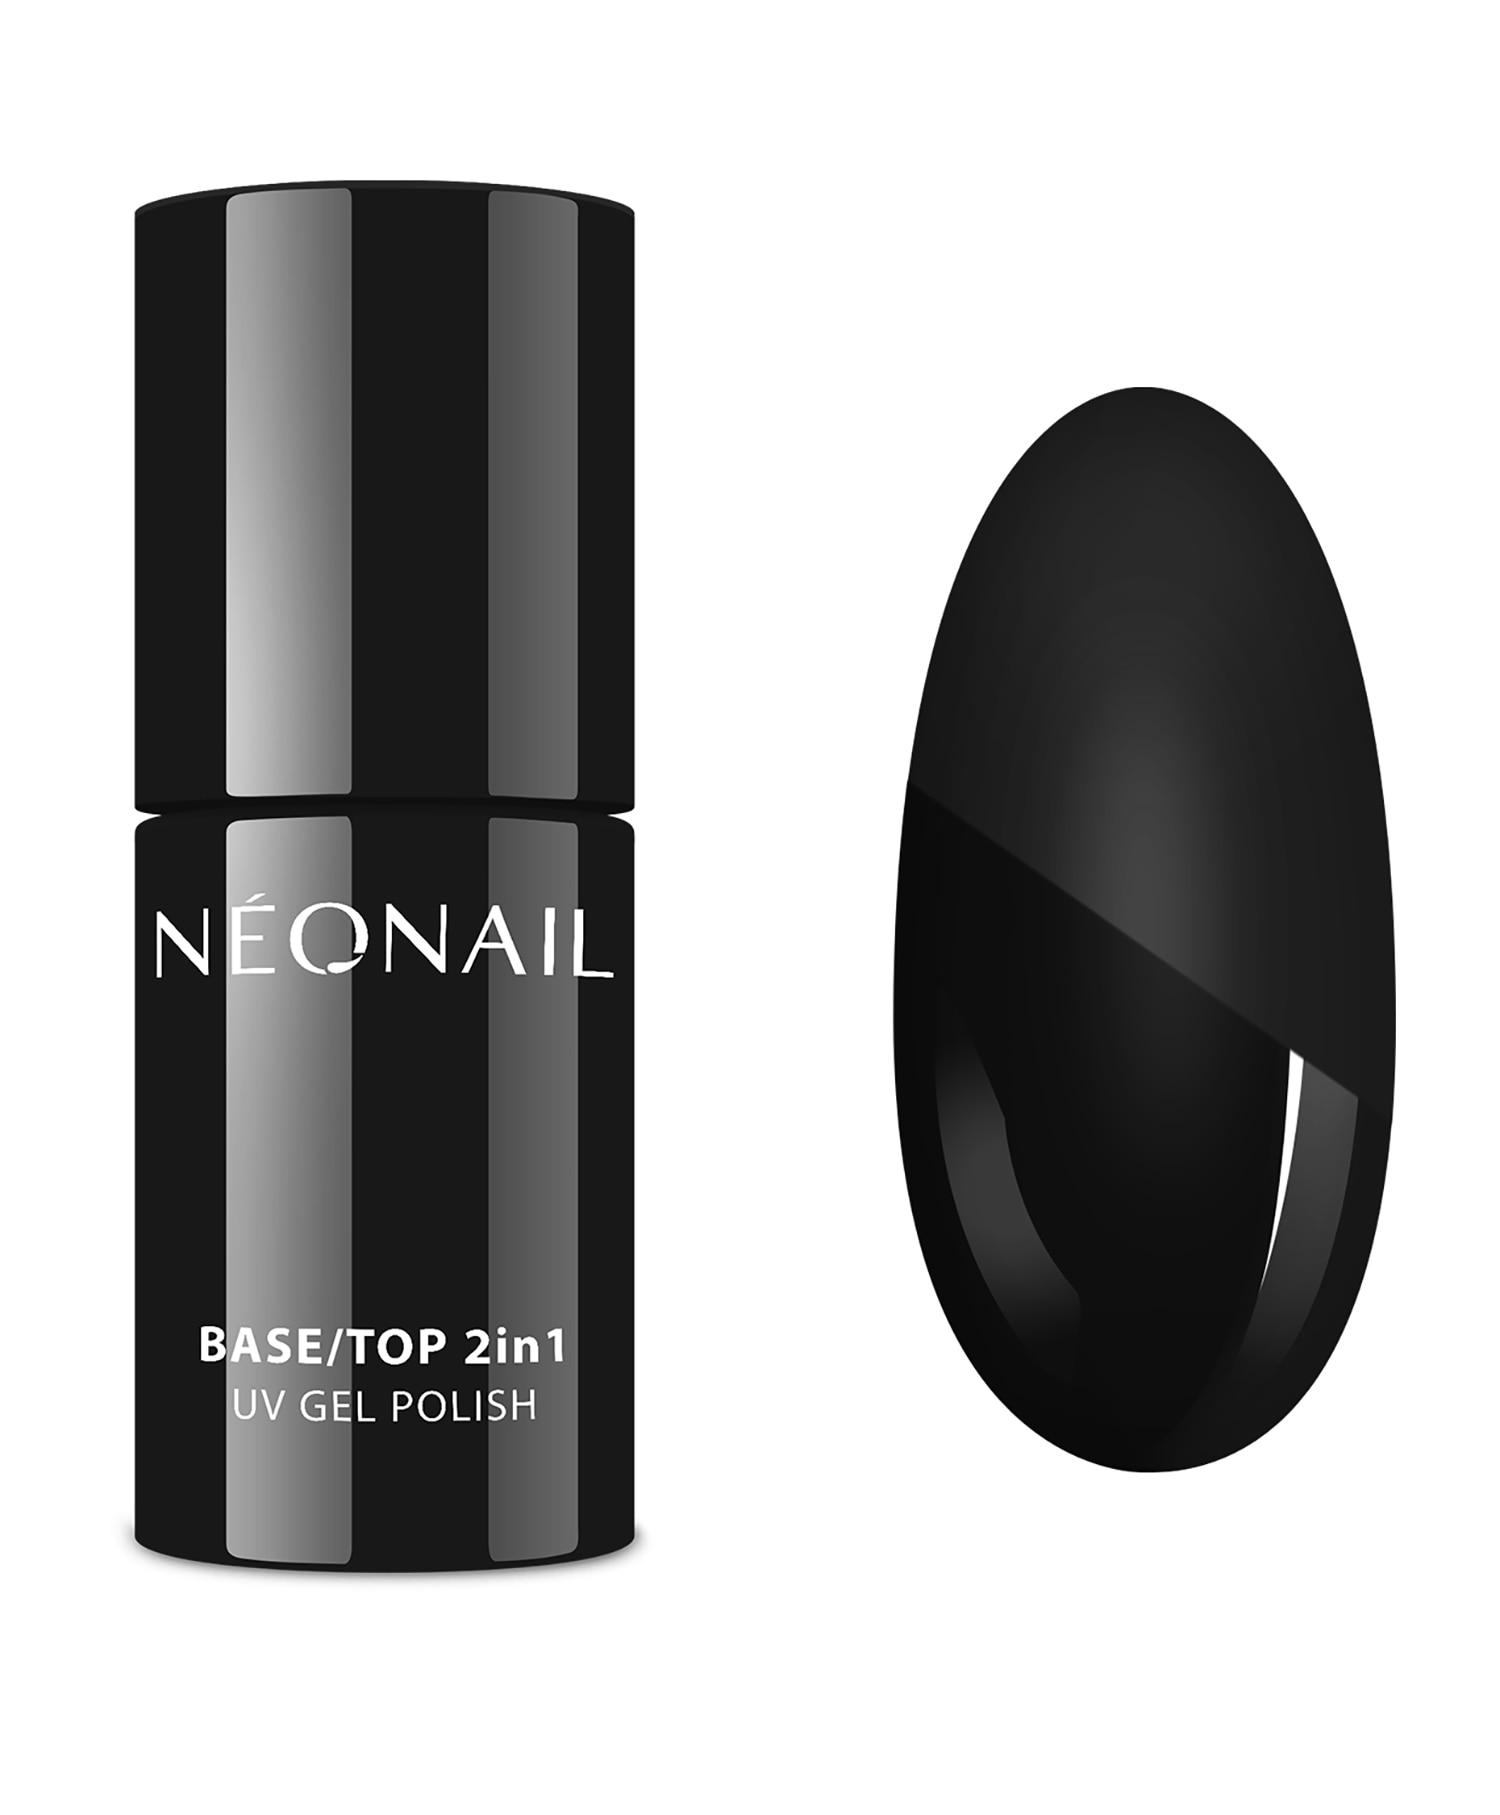 Neonail Base/Top 2in1